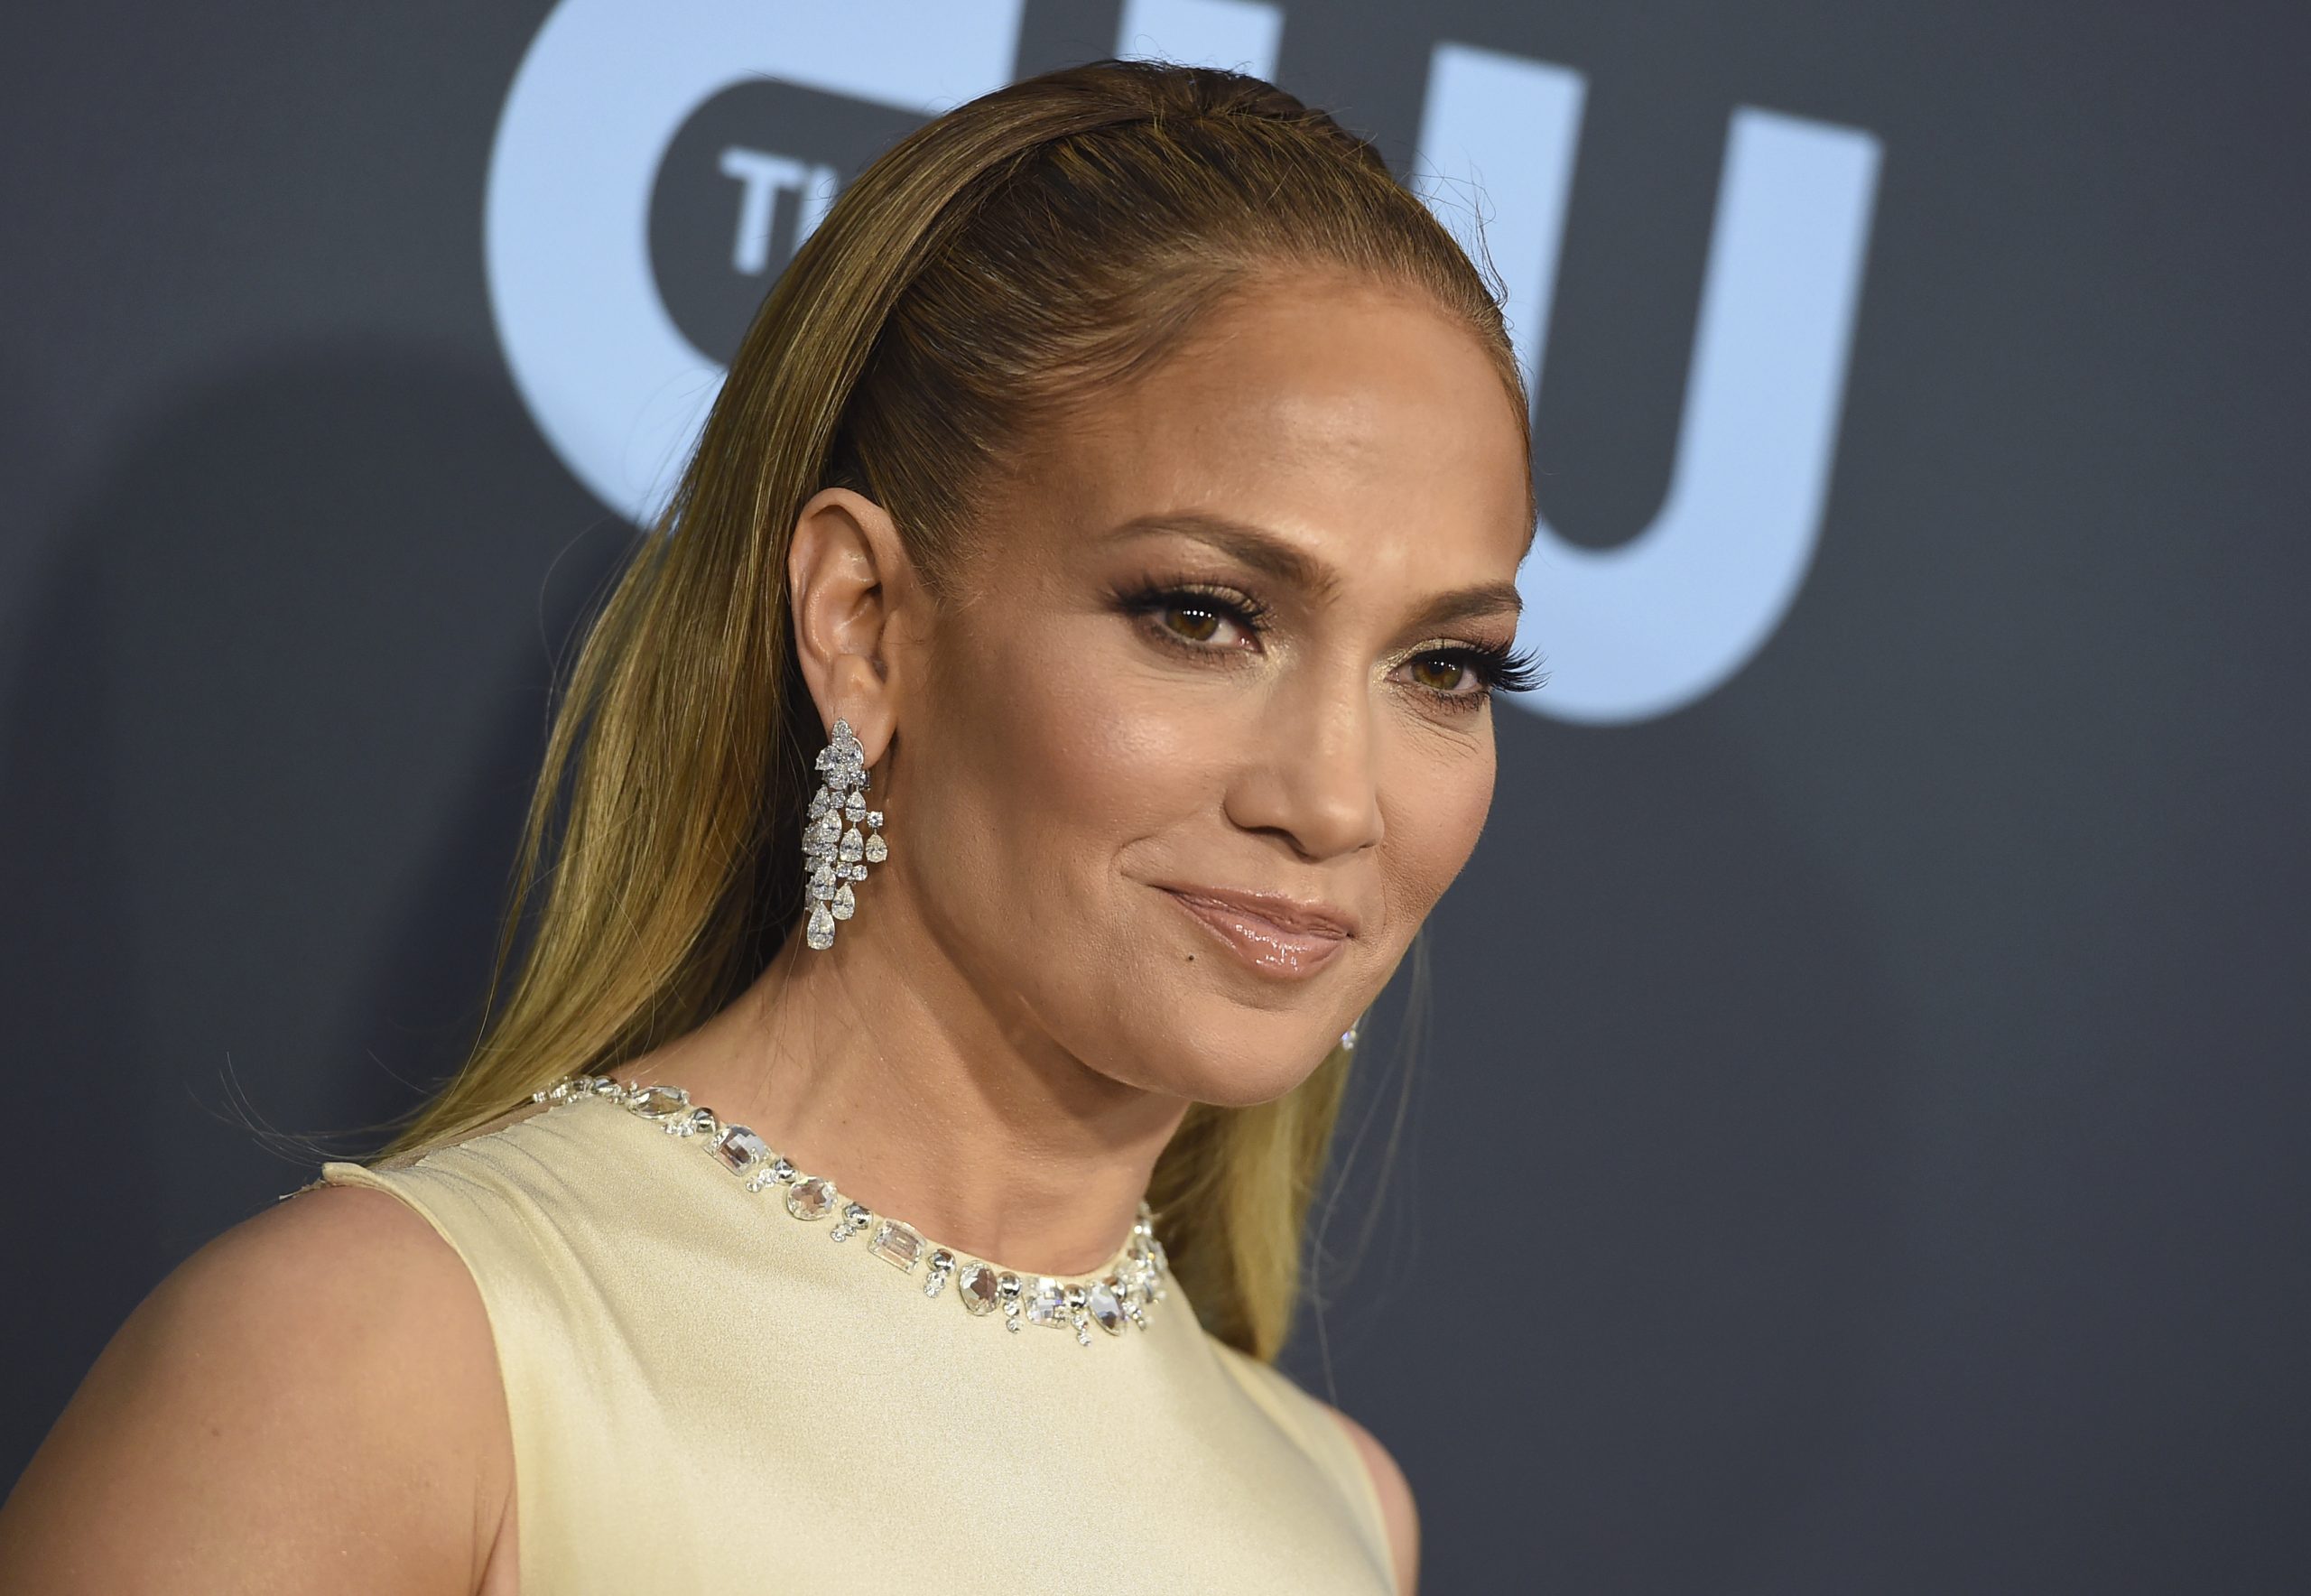 2020 Showed us What Mattered, Jennifer Lopez says during Award Speech